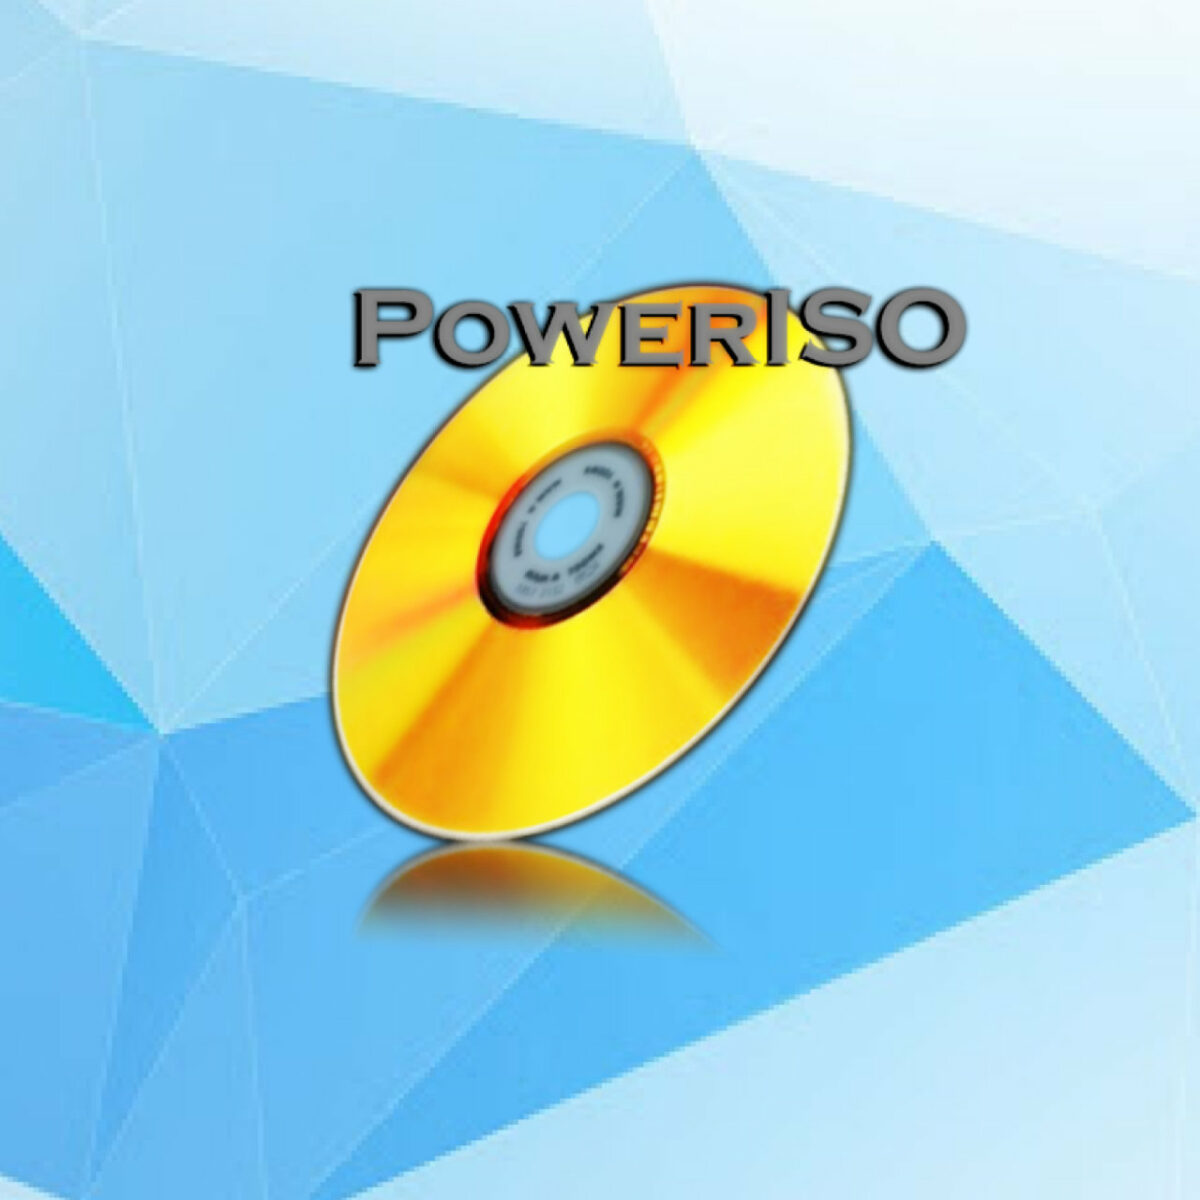 integrate poweriso into shell